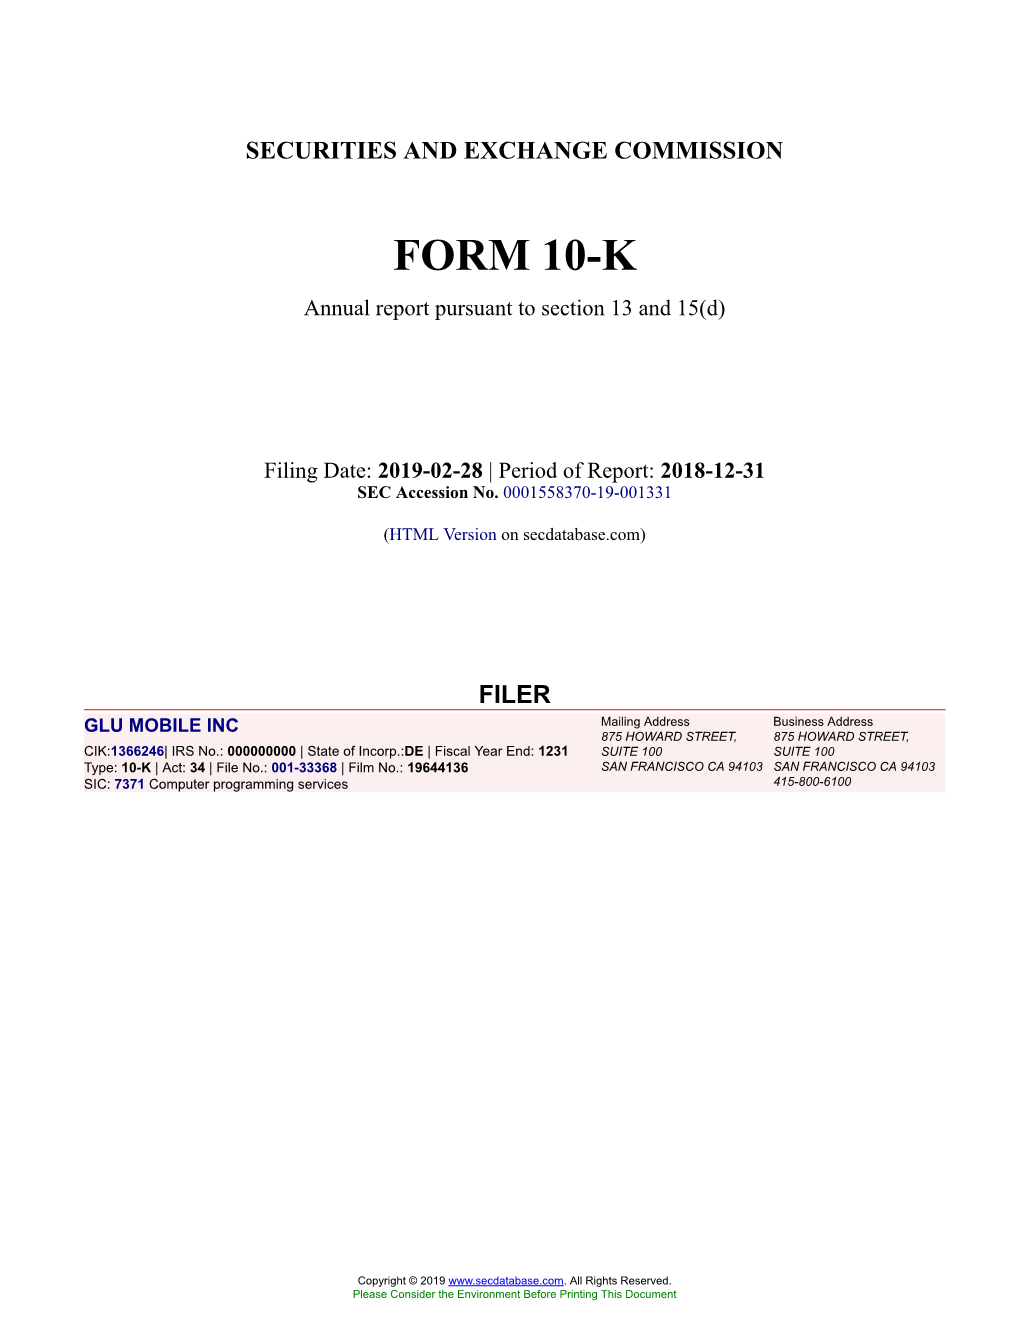 GLU MOBILE INC Form 10-K Annual Report Filed 2019-02-28